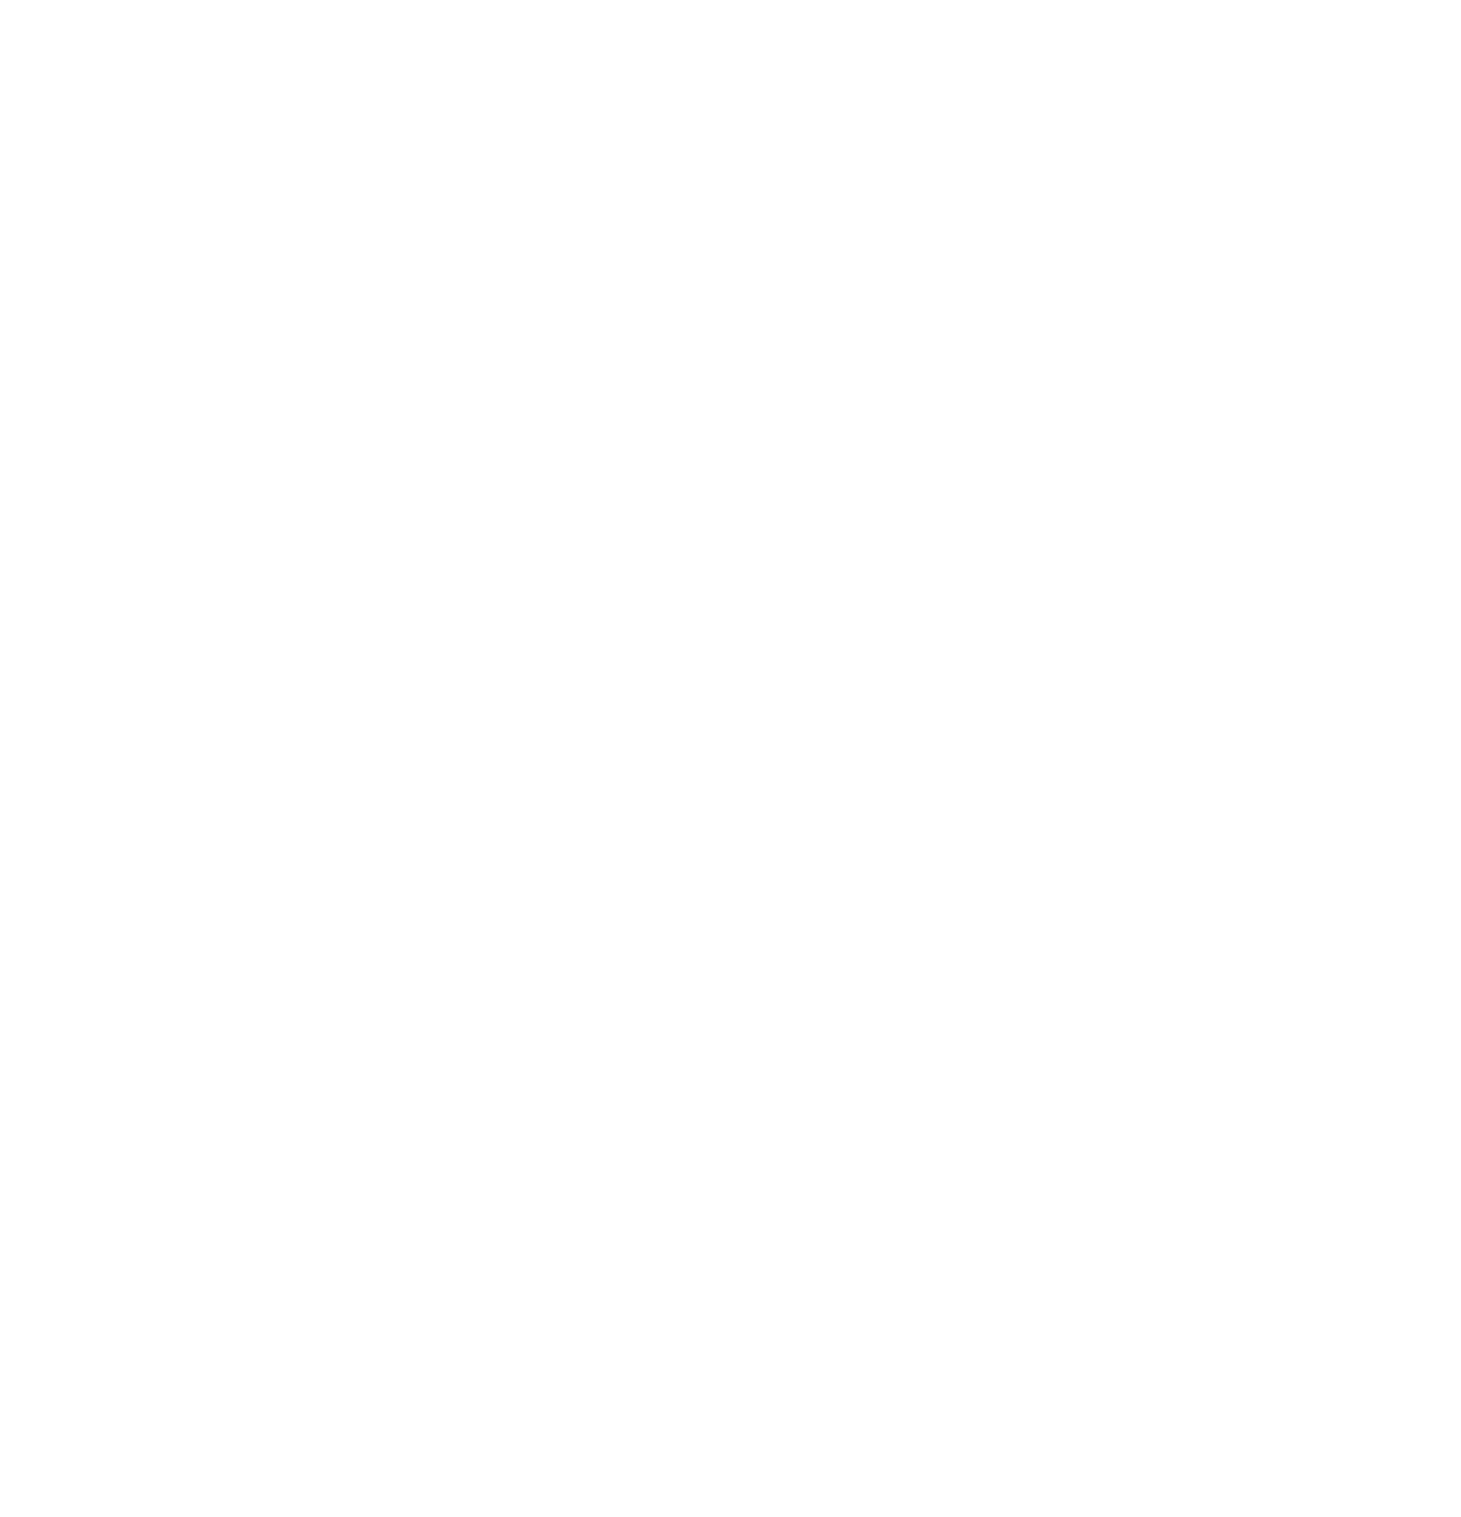 Brederode logo pour fonds sombres (PNG transparent)